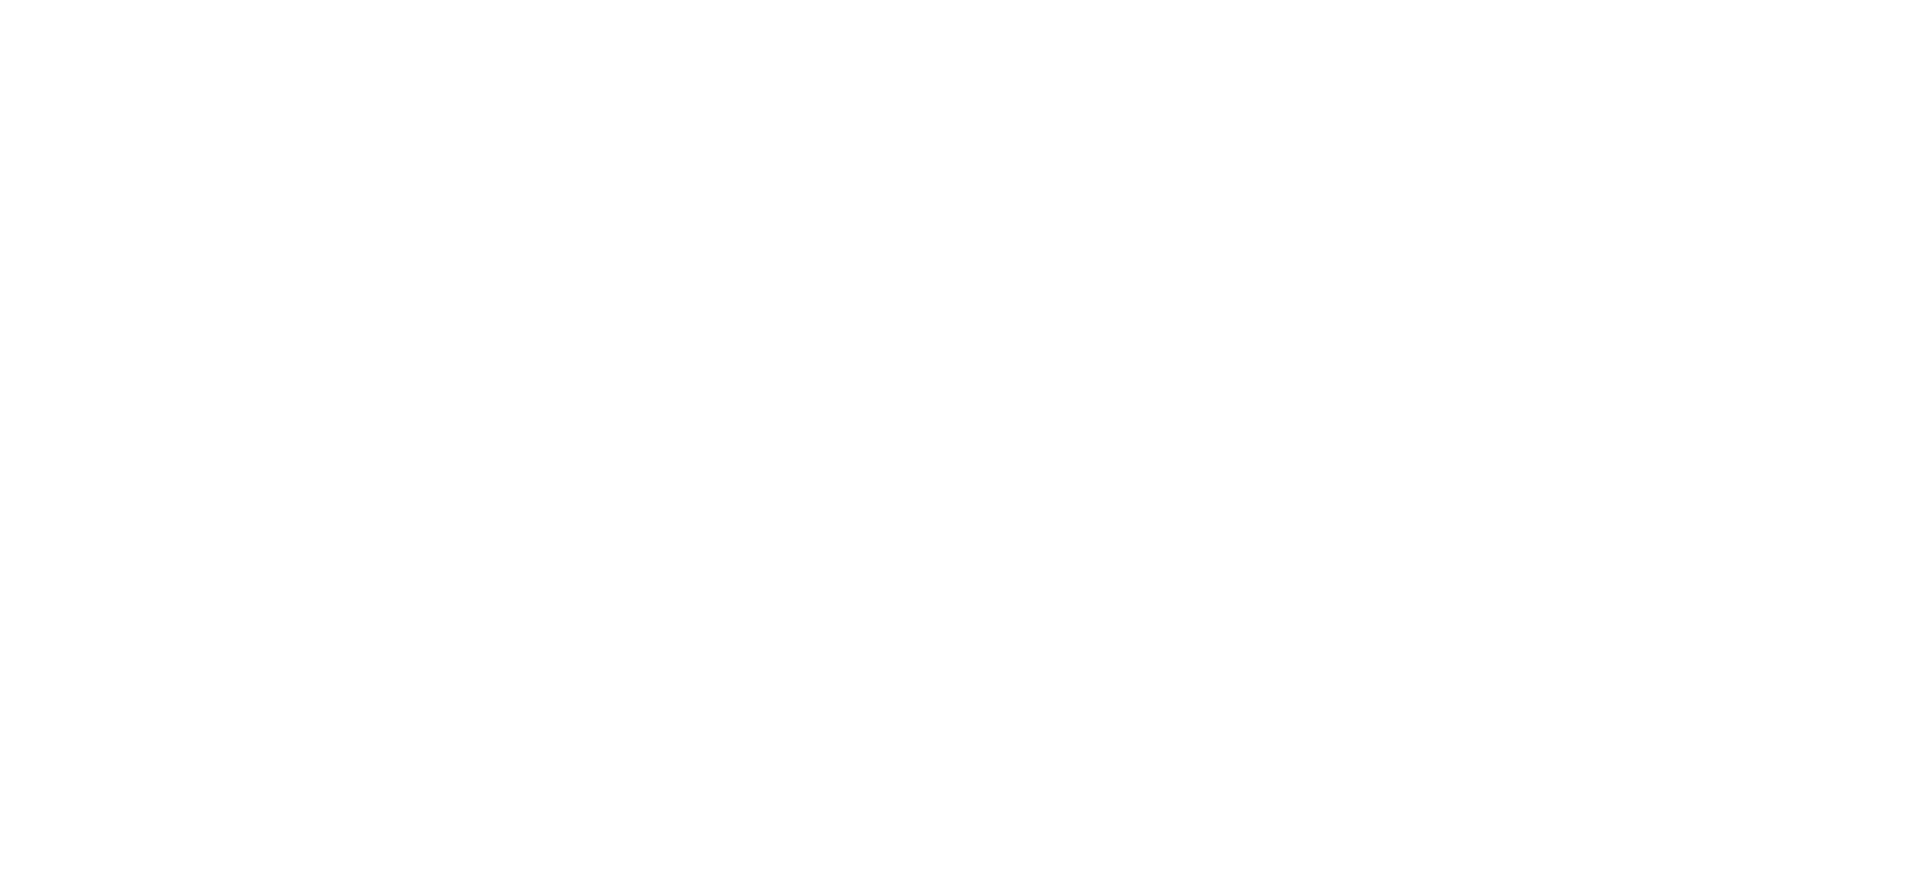 Sepeda Hostel logo